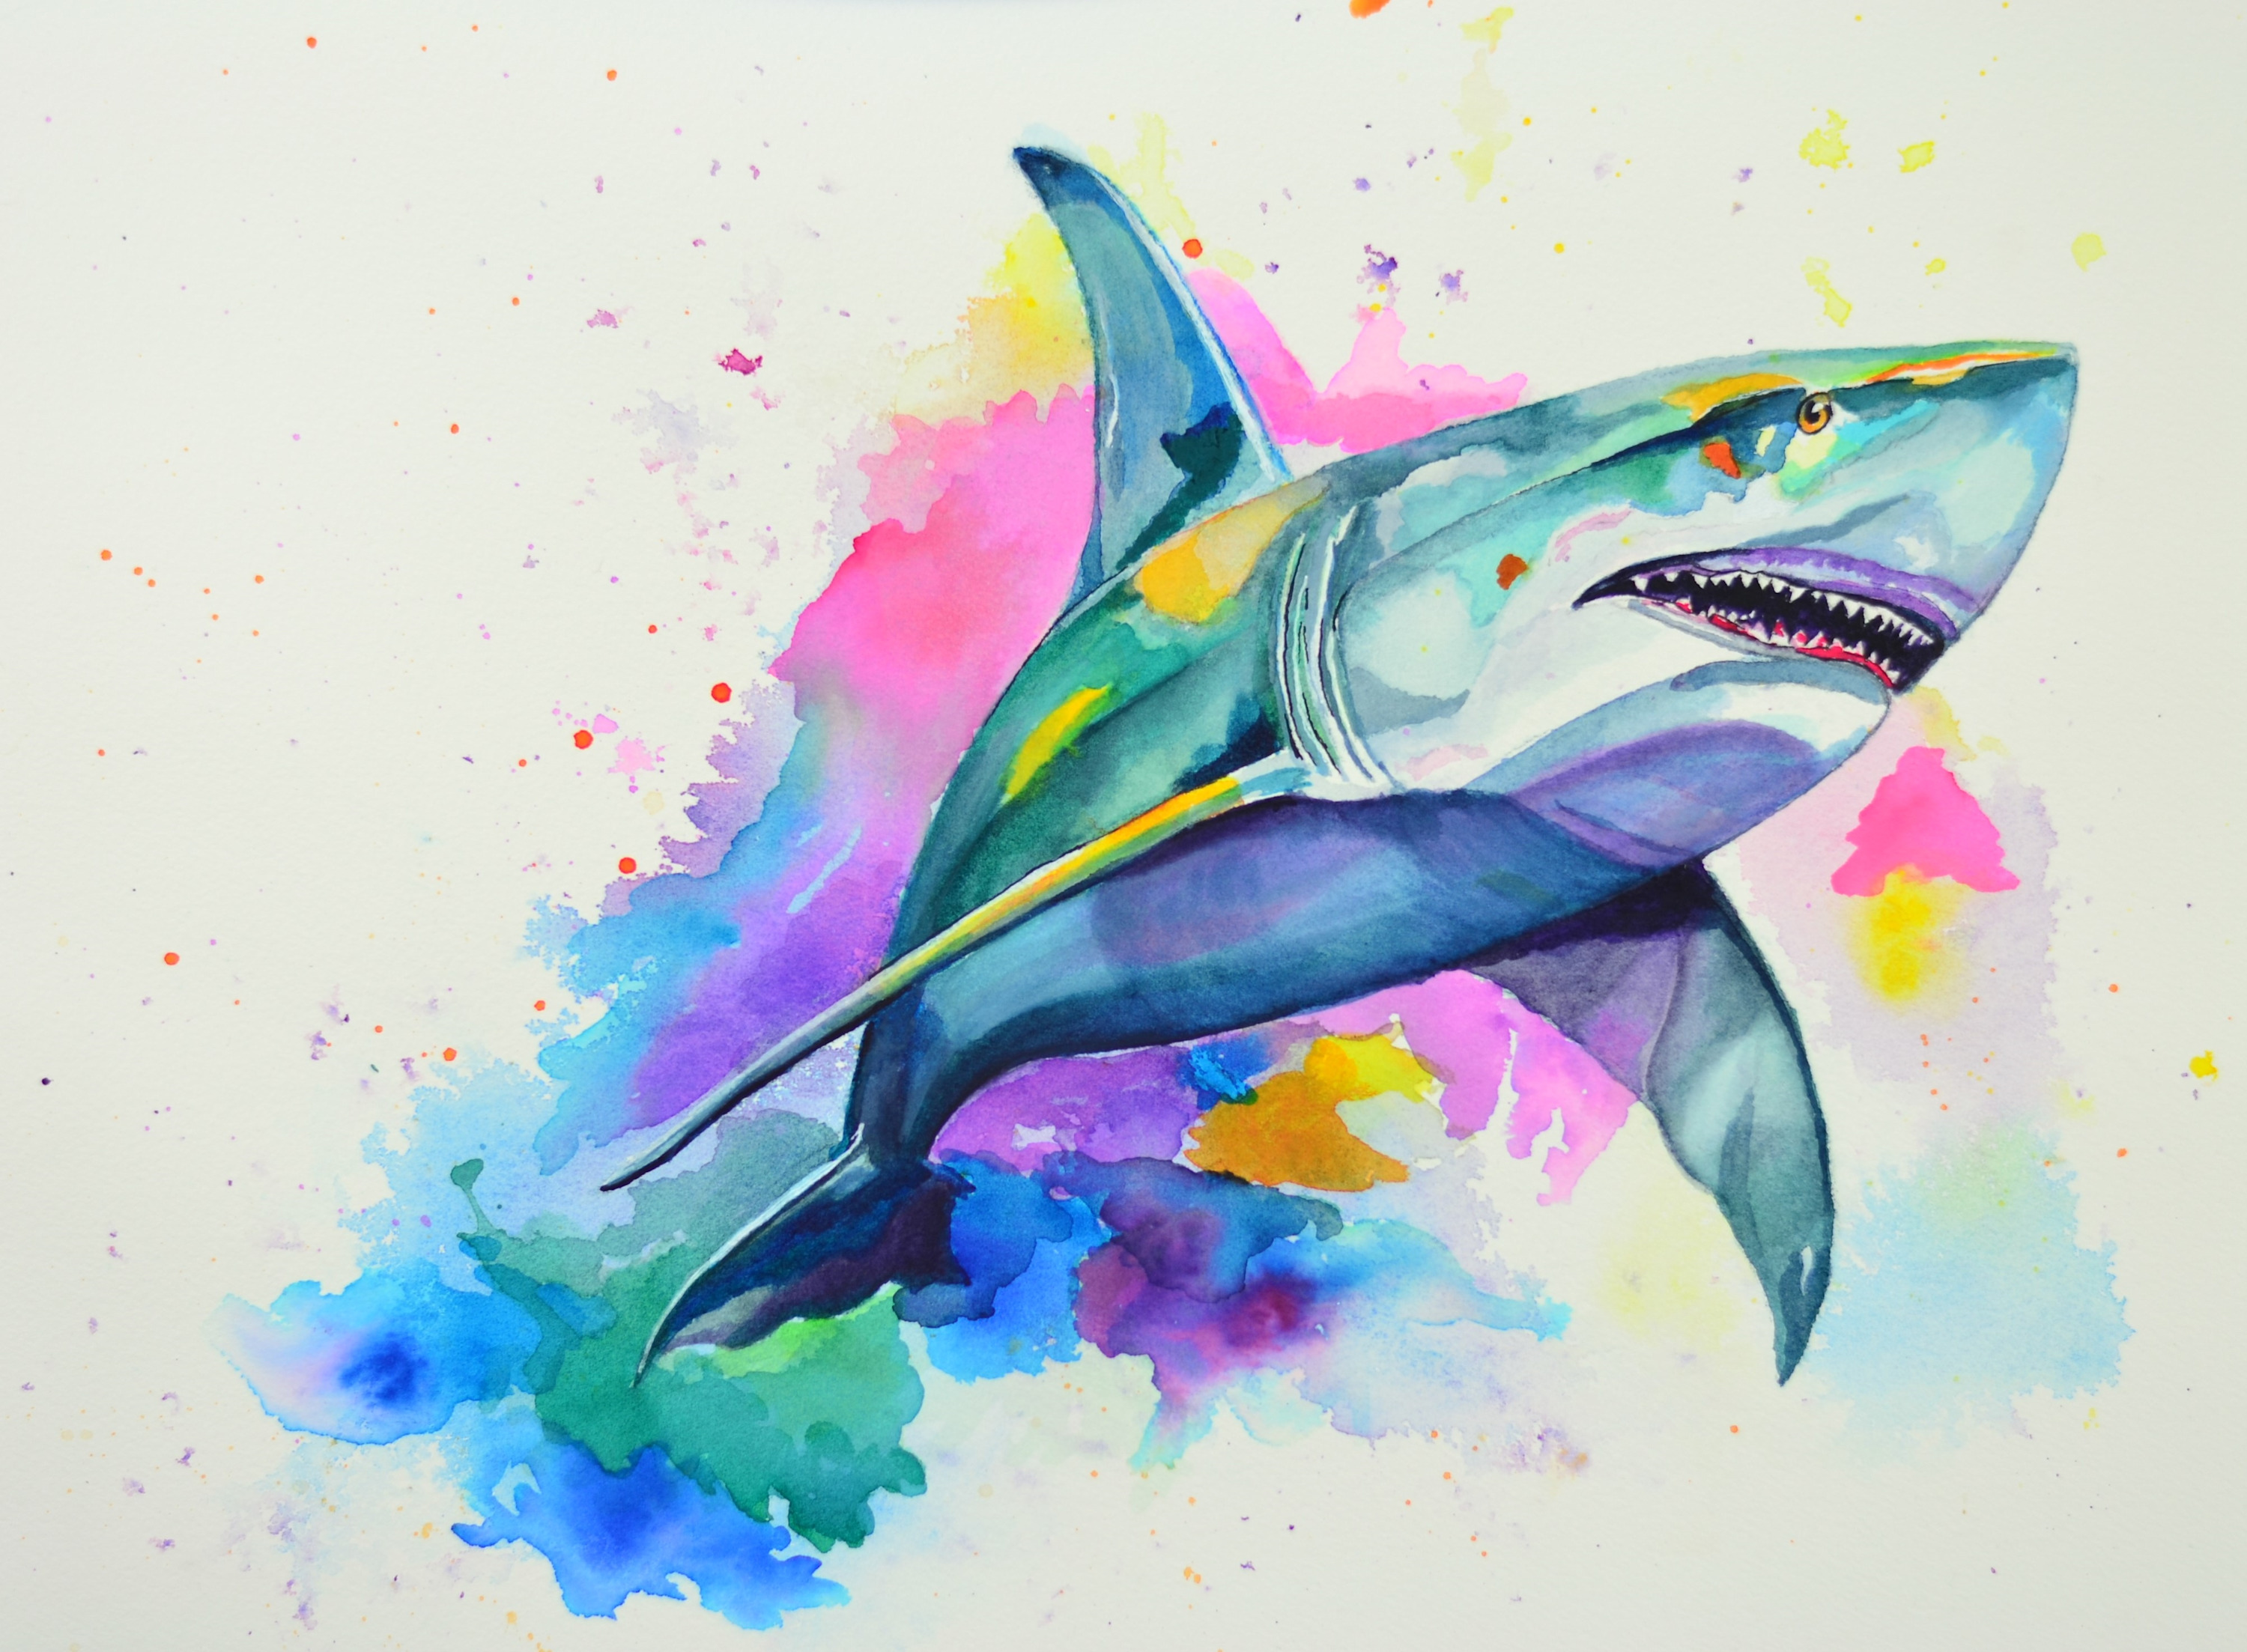 Shark splash watercolor 12 x 16 original ud2kja